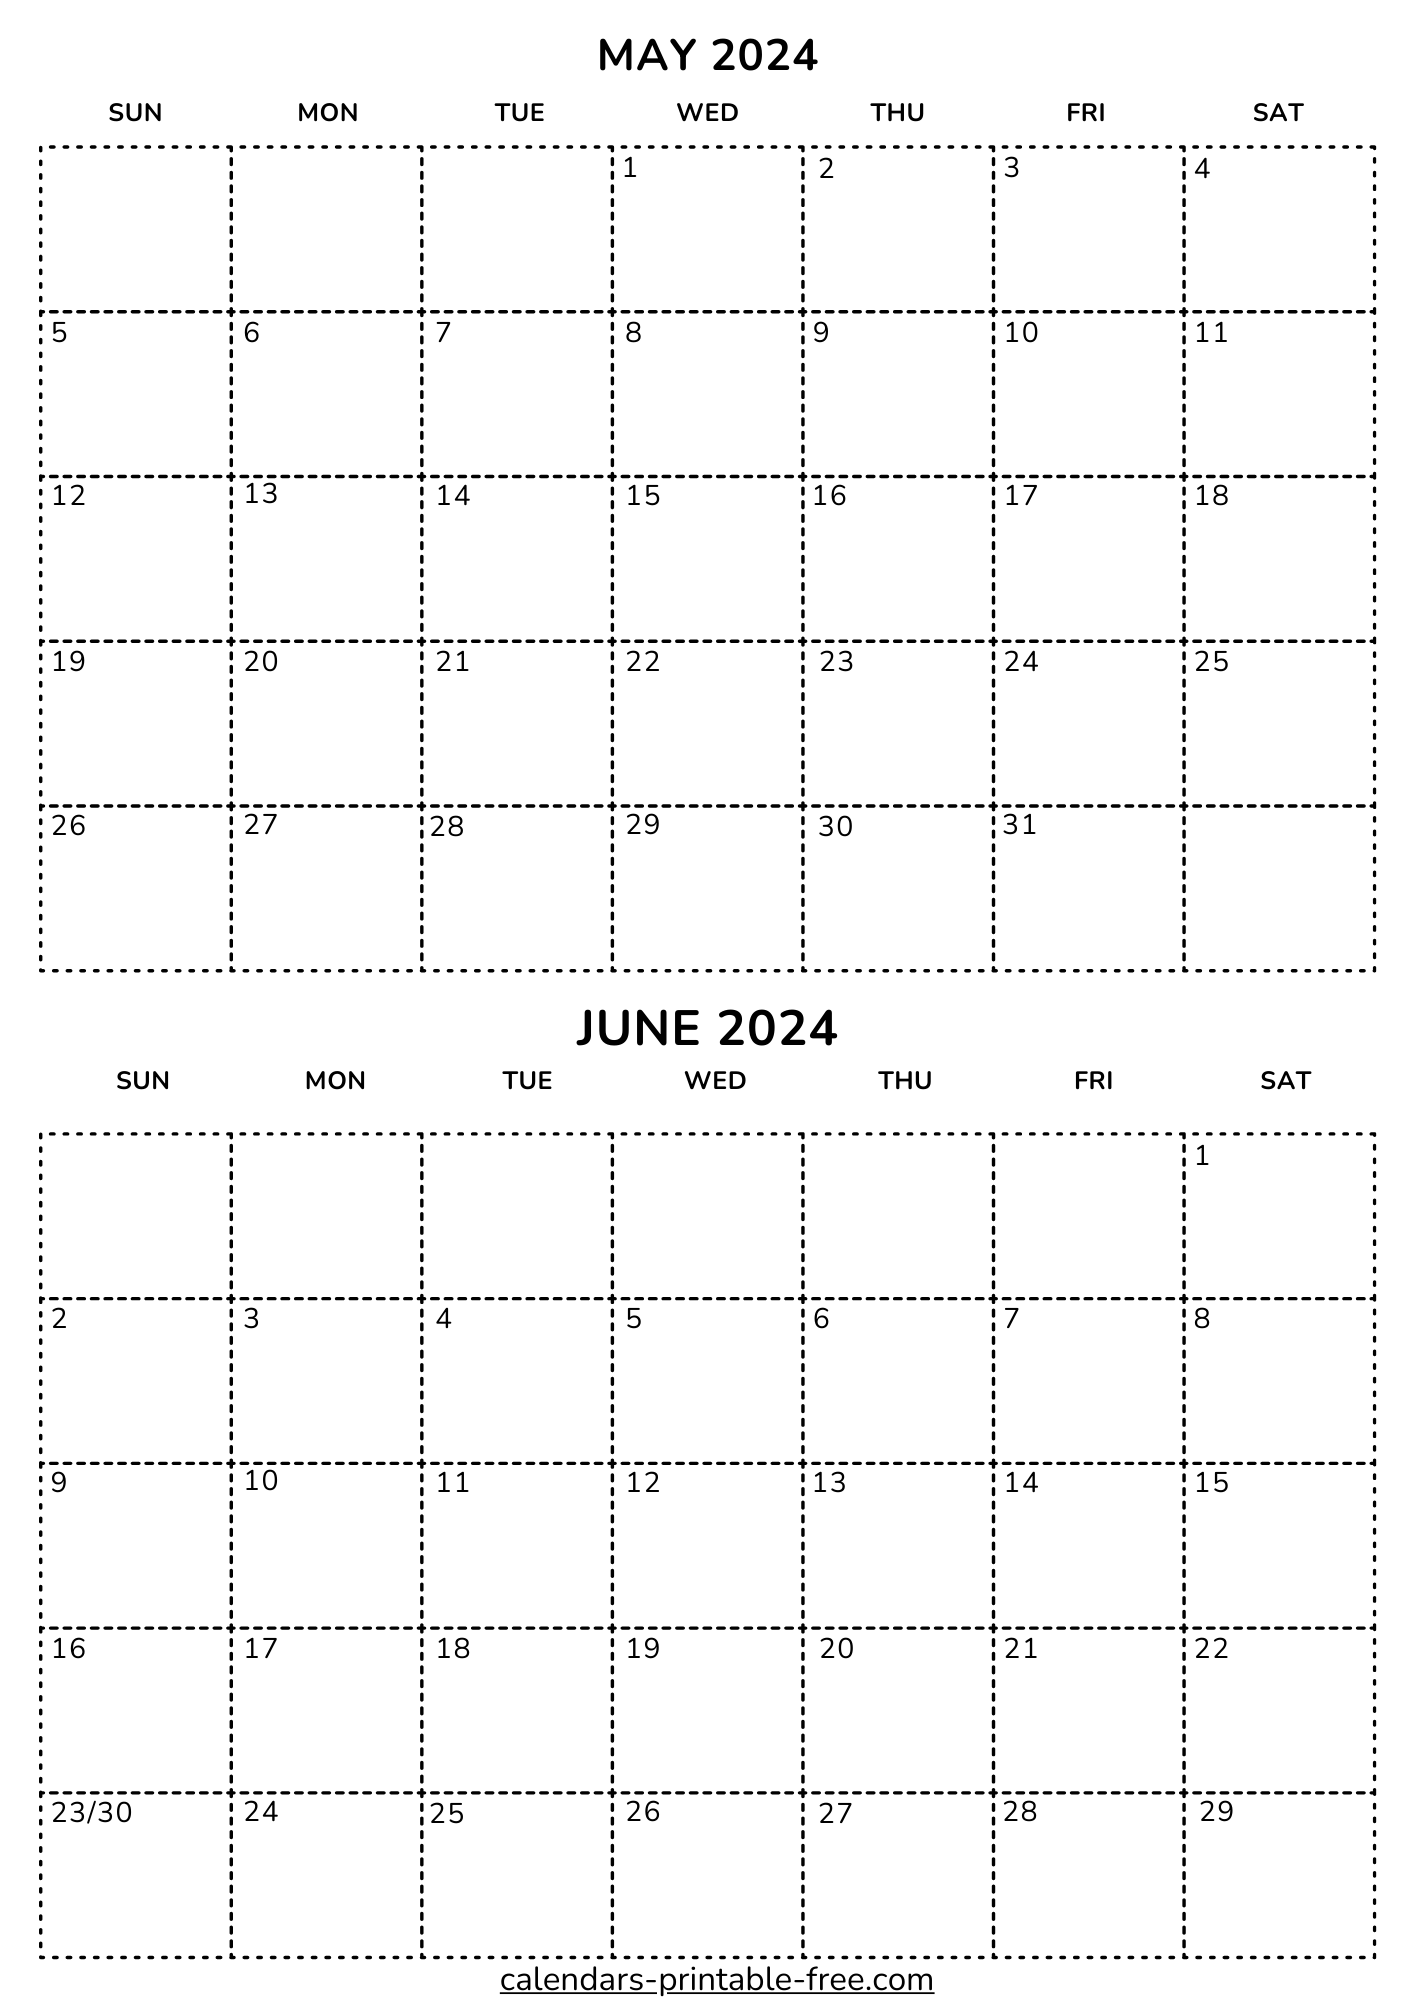 May and June 2024 Calendar Printable Free